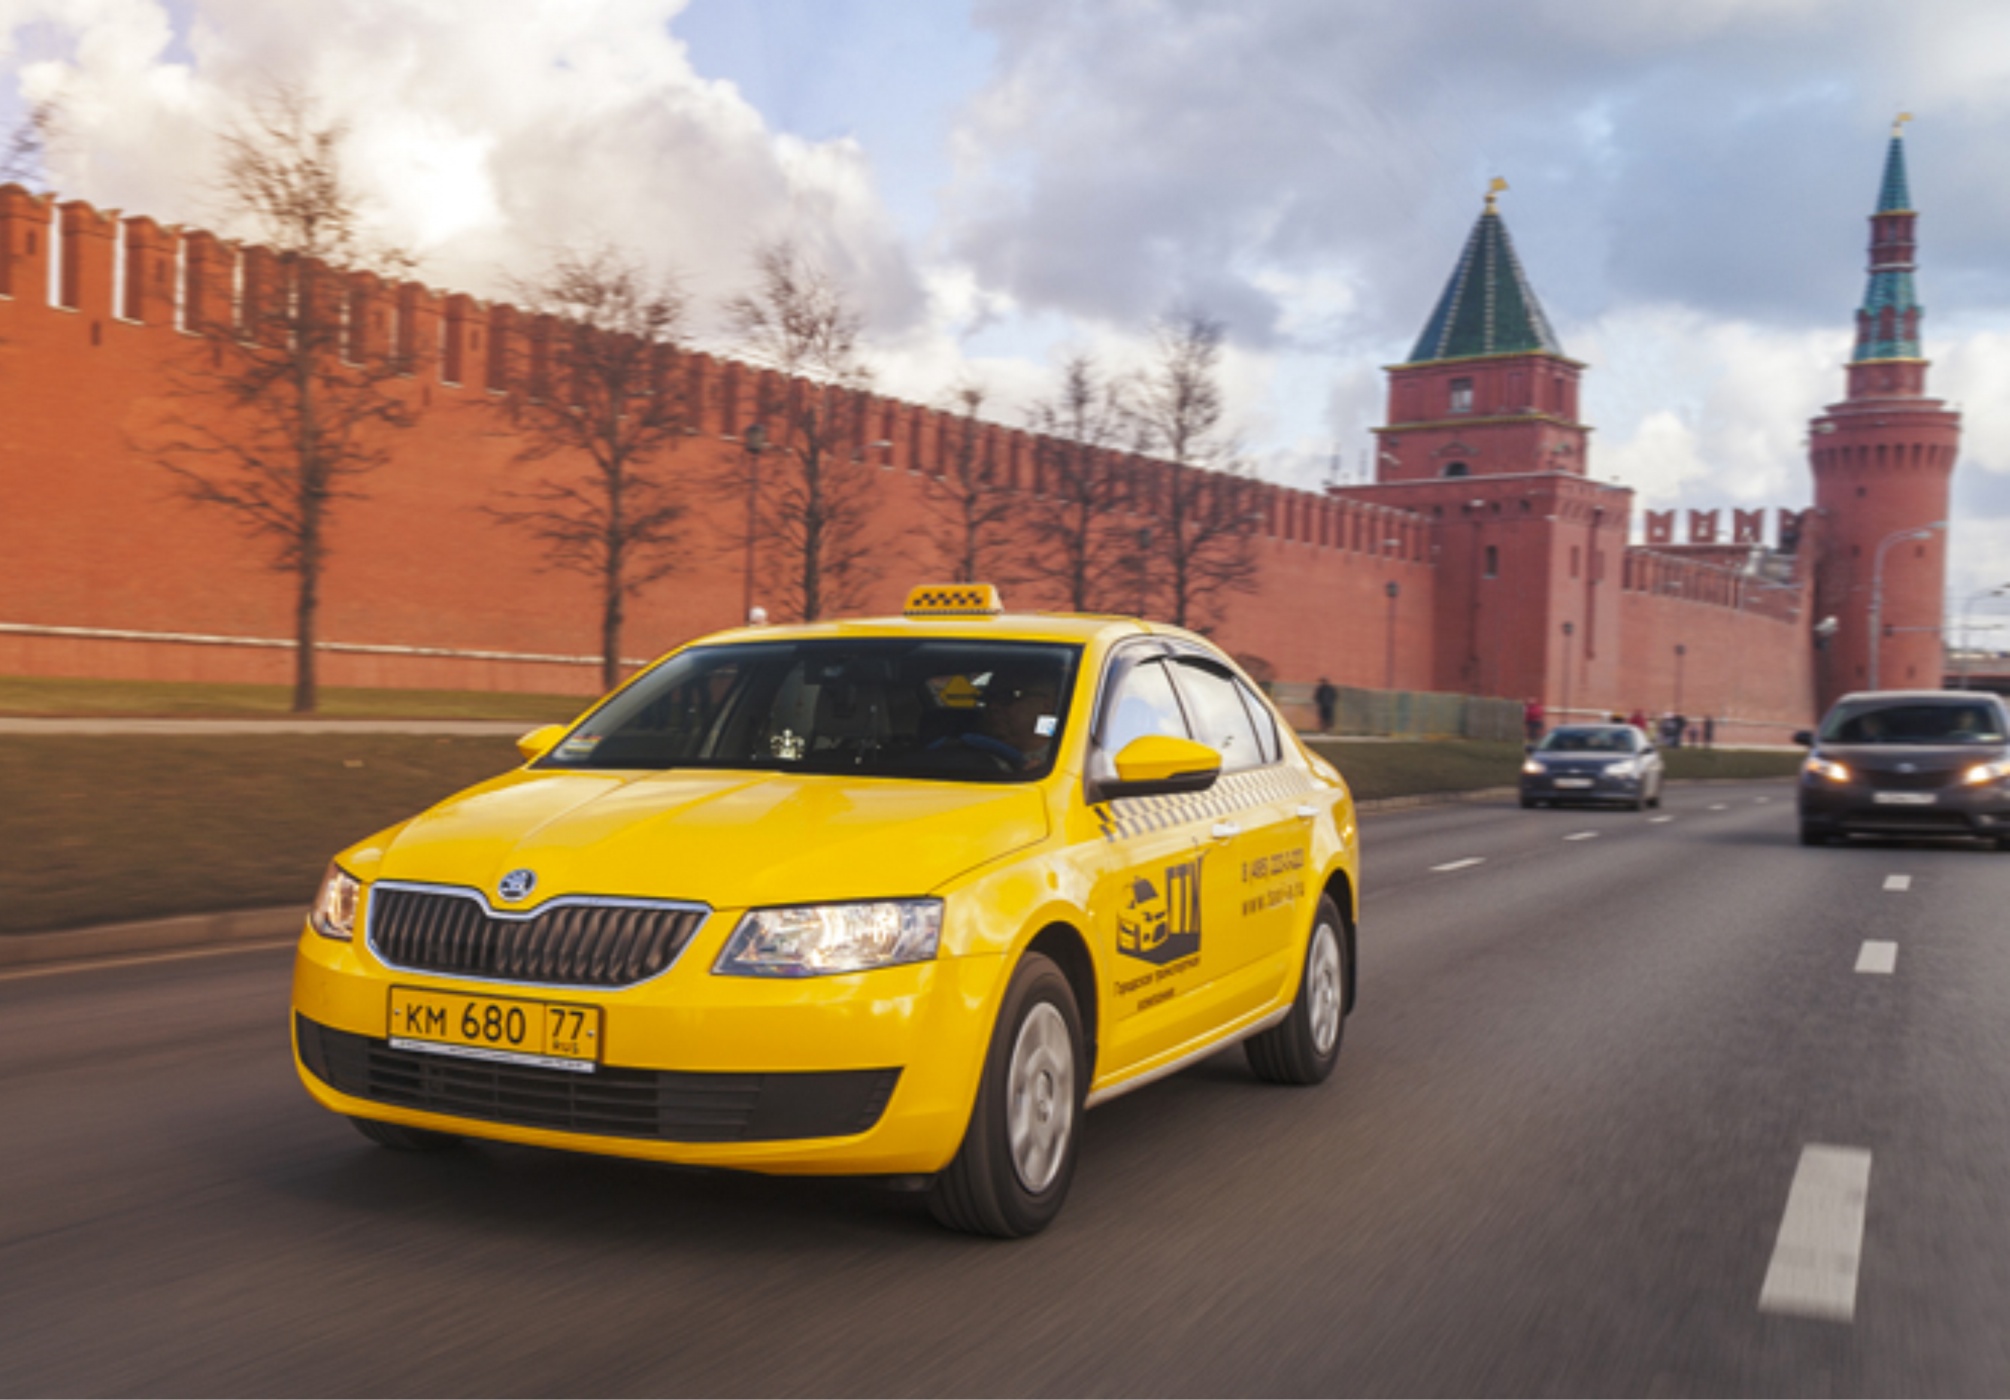 Такси мгу. Машина "такси". Автомобиль «такси». Такси Москва. Московское такси.